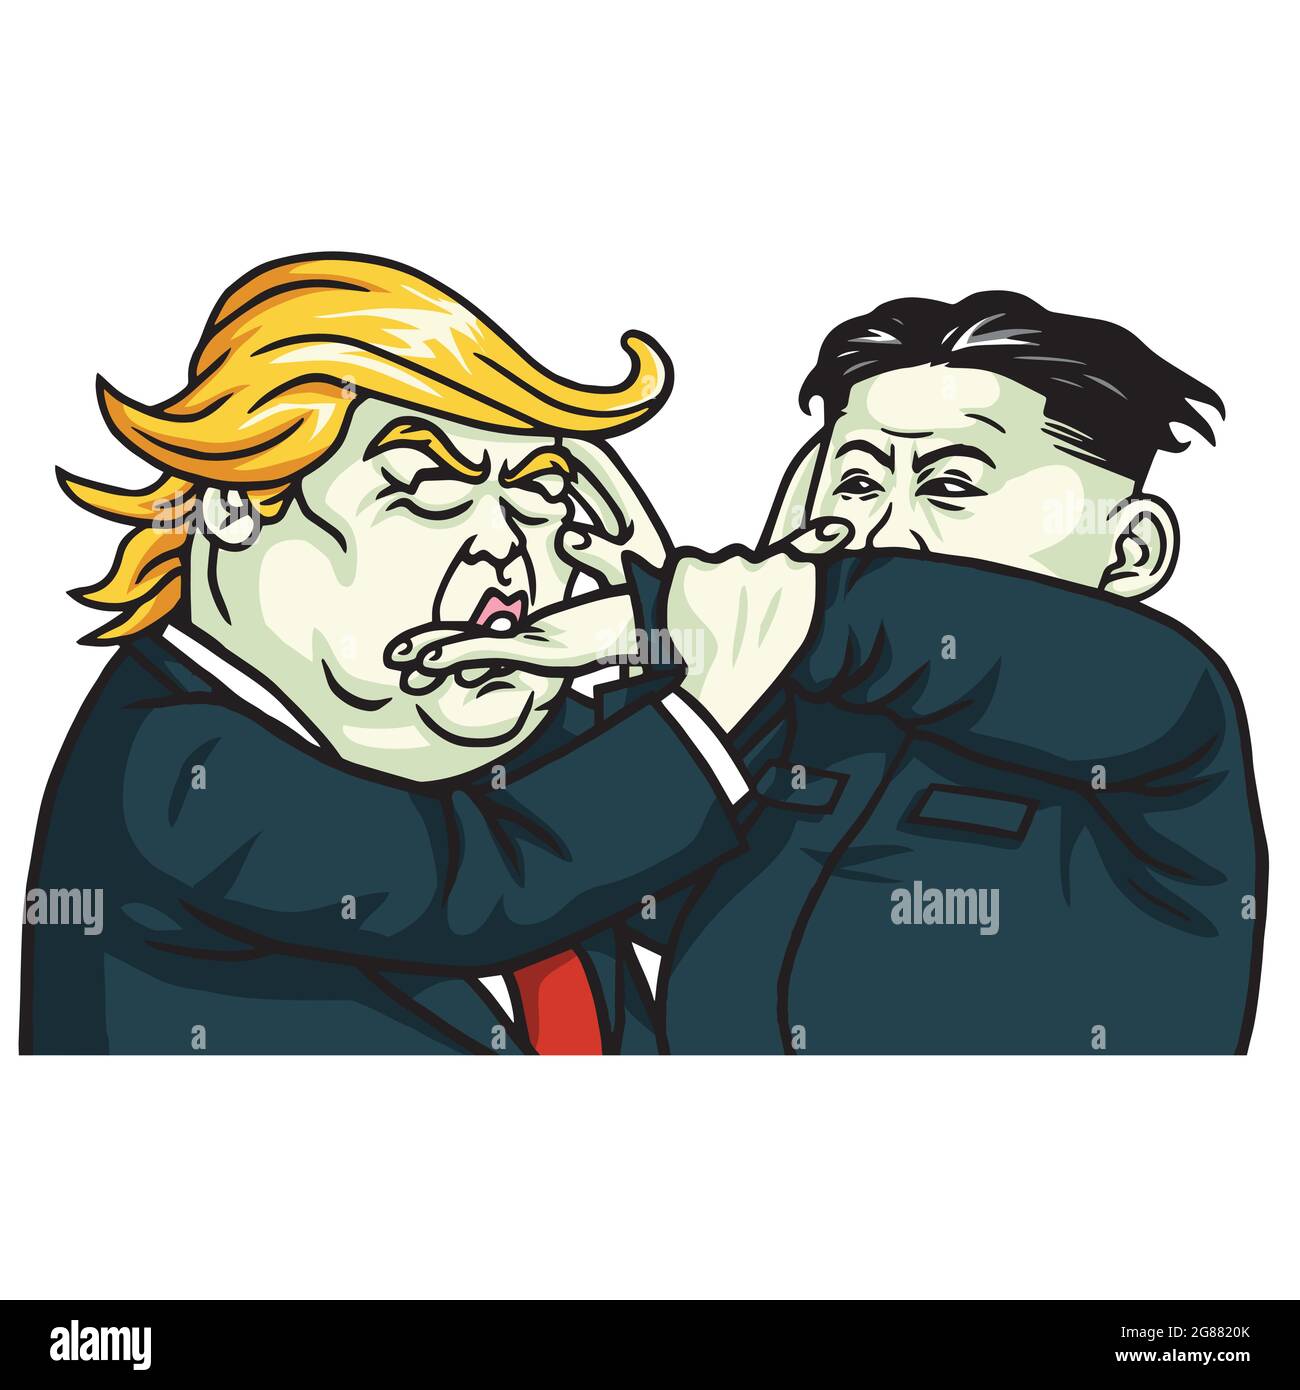 Donald Trump gegen Kim Jong-un im Kampf. Vektorgrafik Zeichnung Stock Vektor